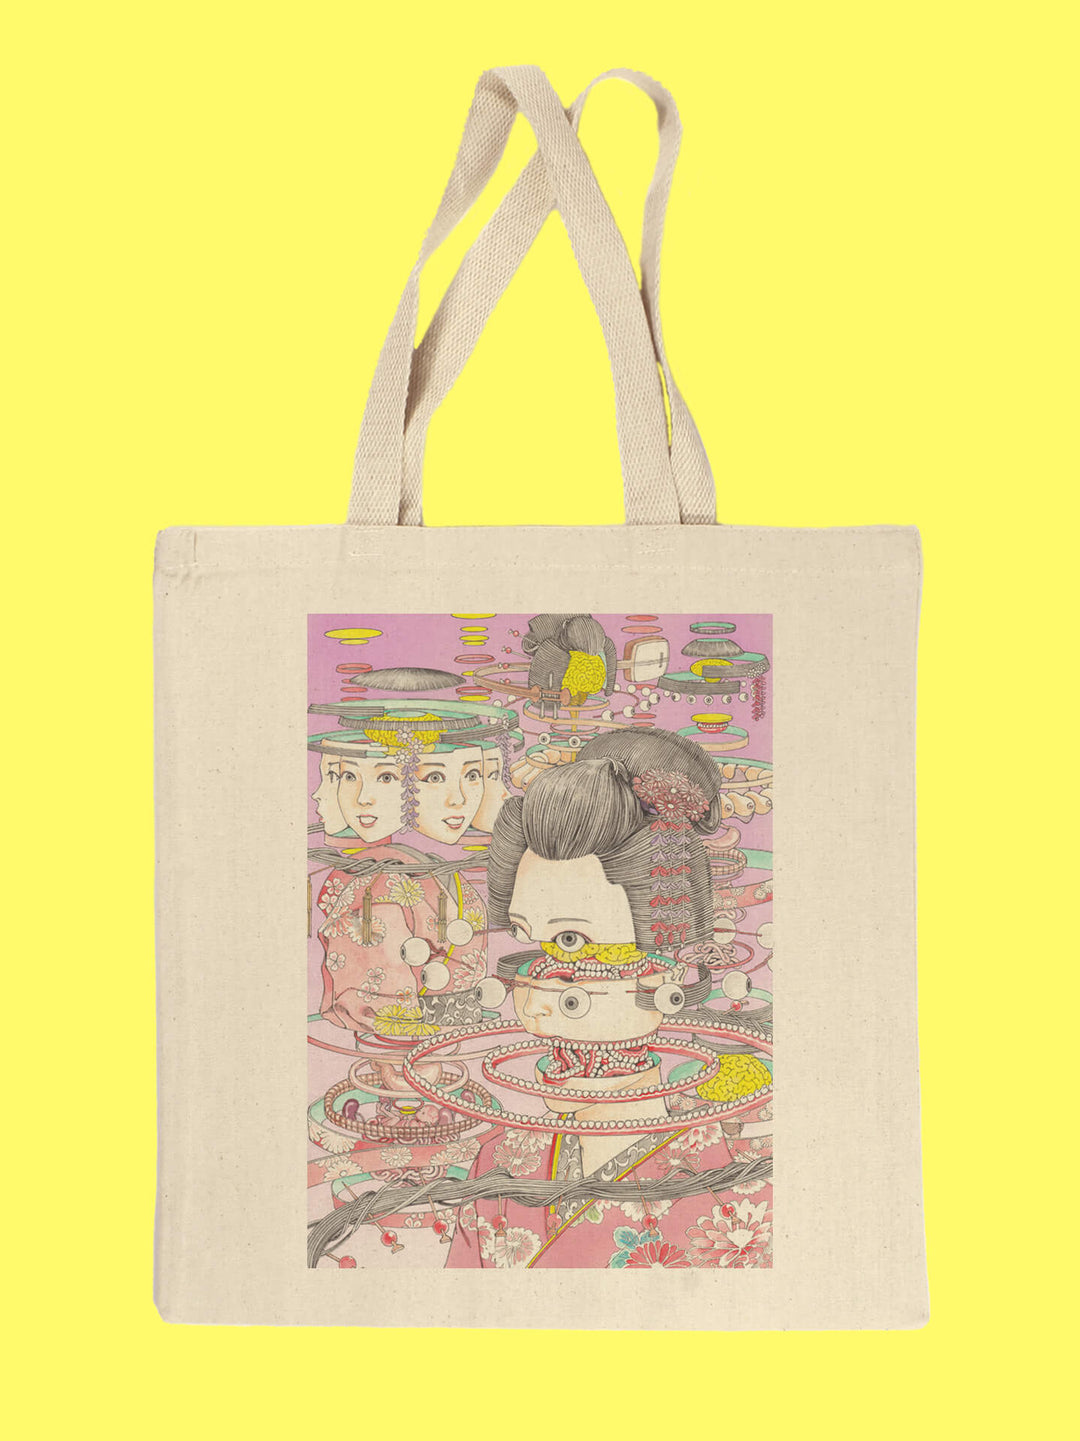 Trippy surreal horror manga geisha designed canvas tote bag by Japanese manga artist Shintaro Kago.